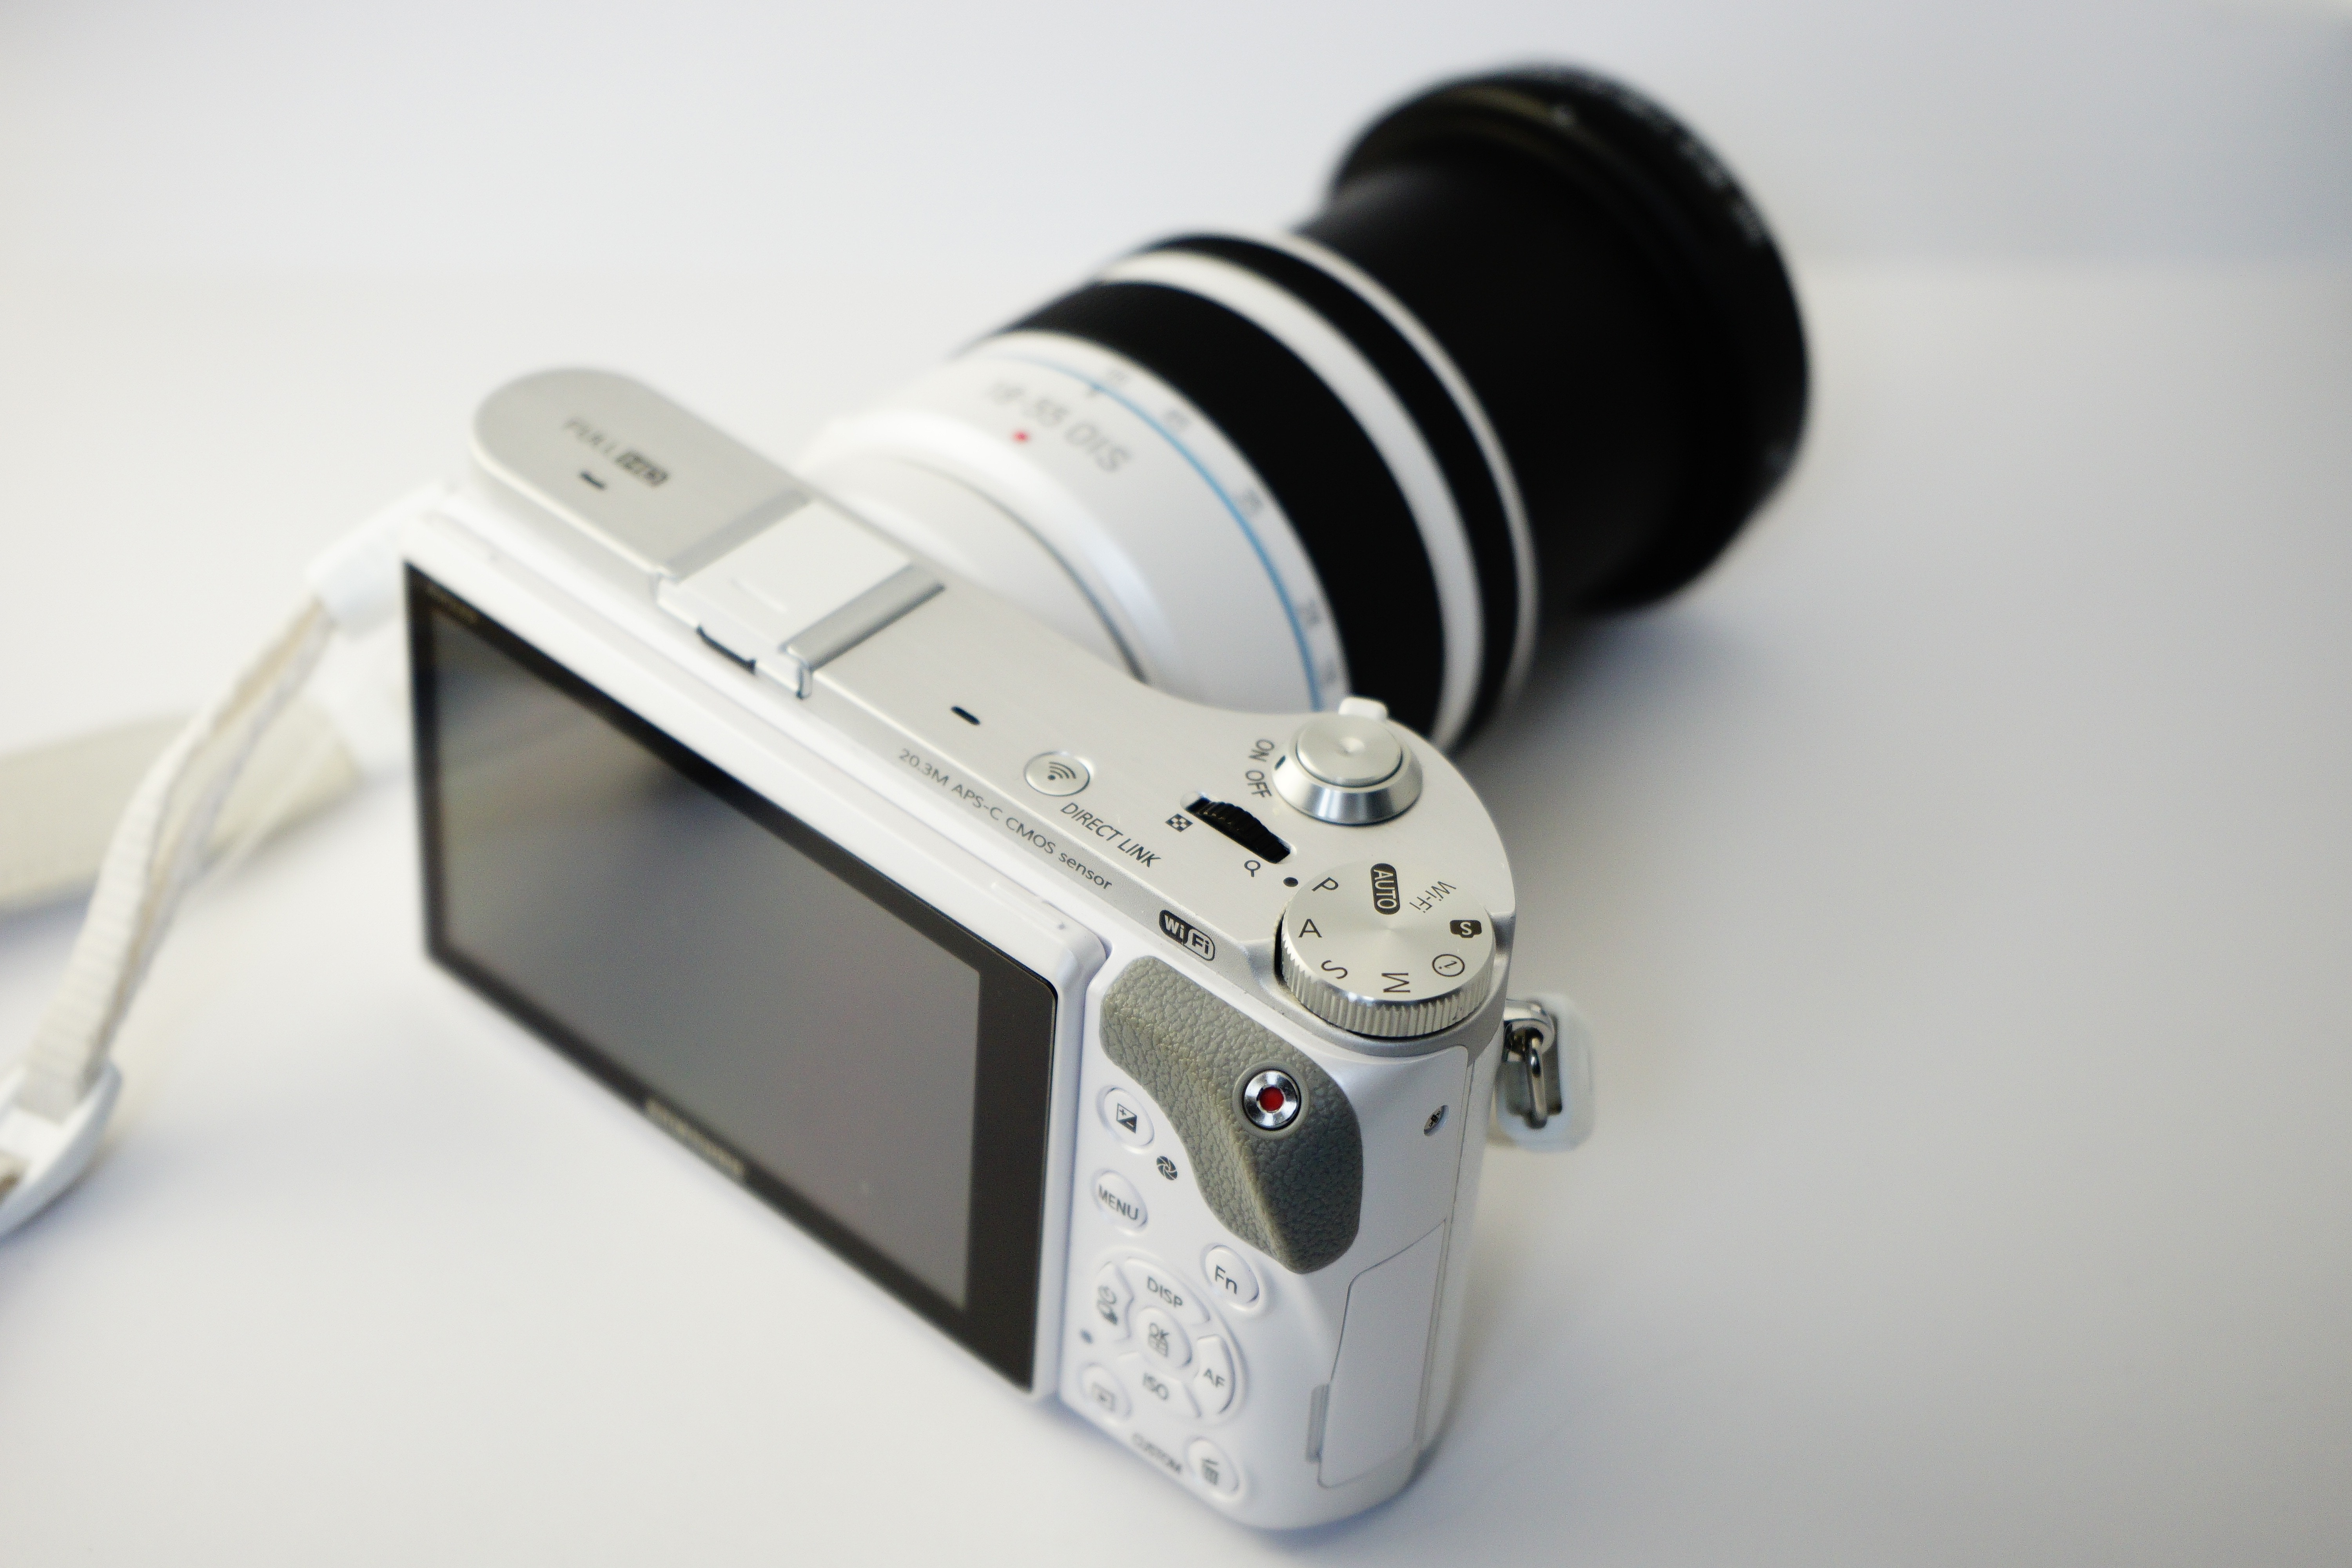 White and black DSLR camera